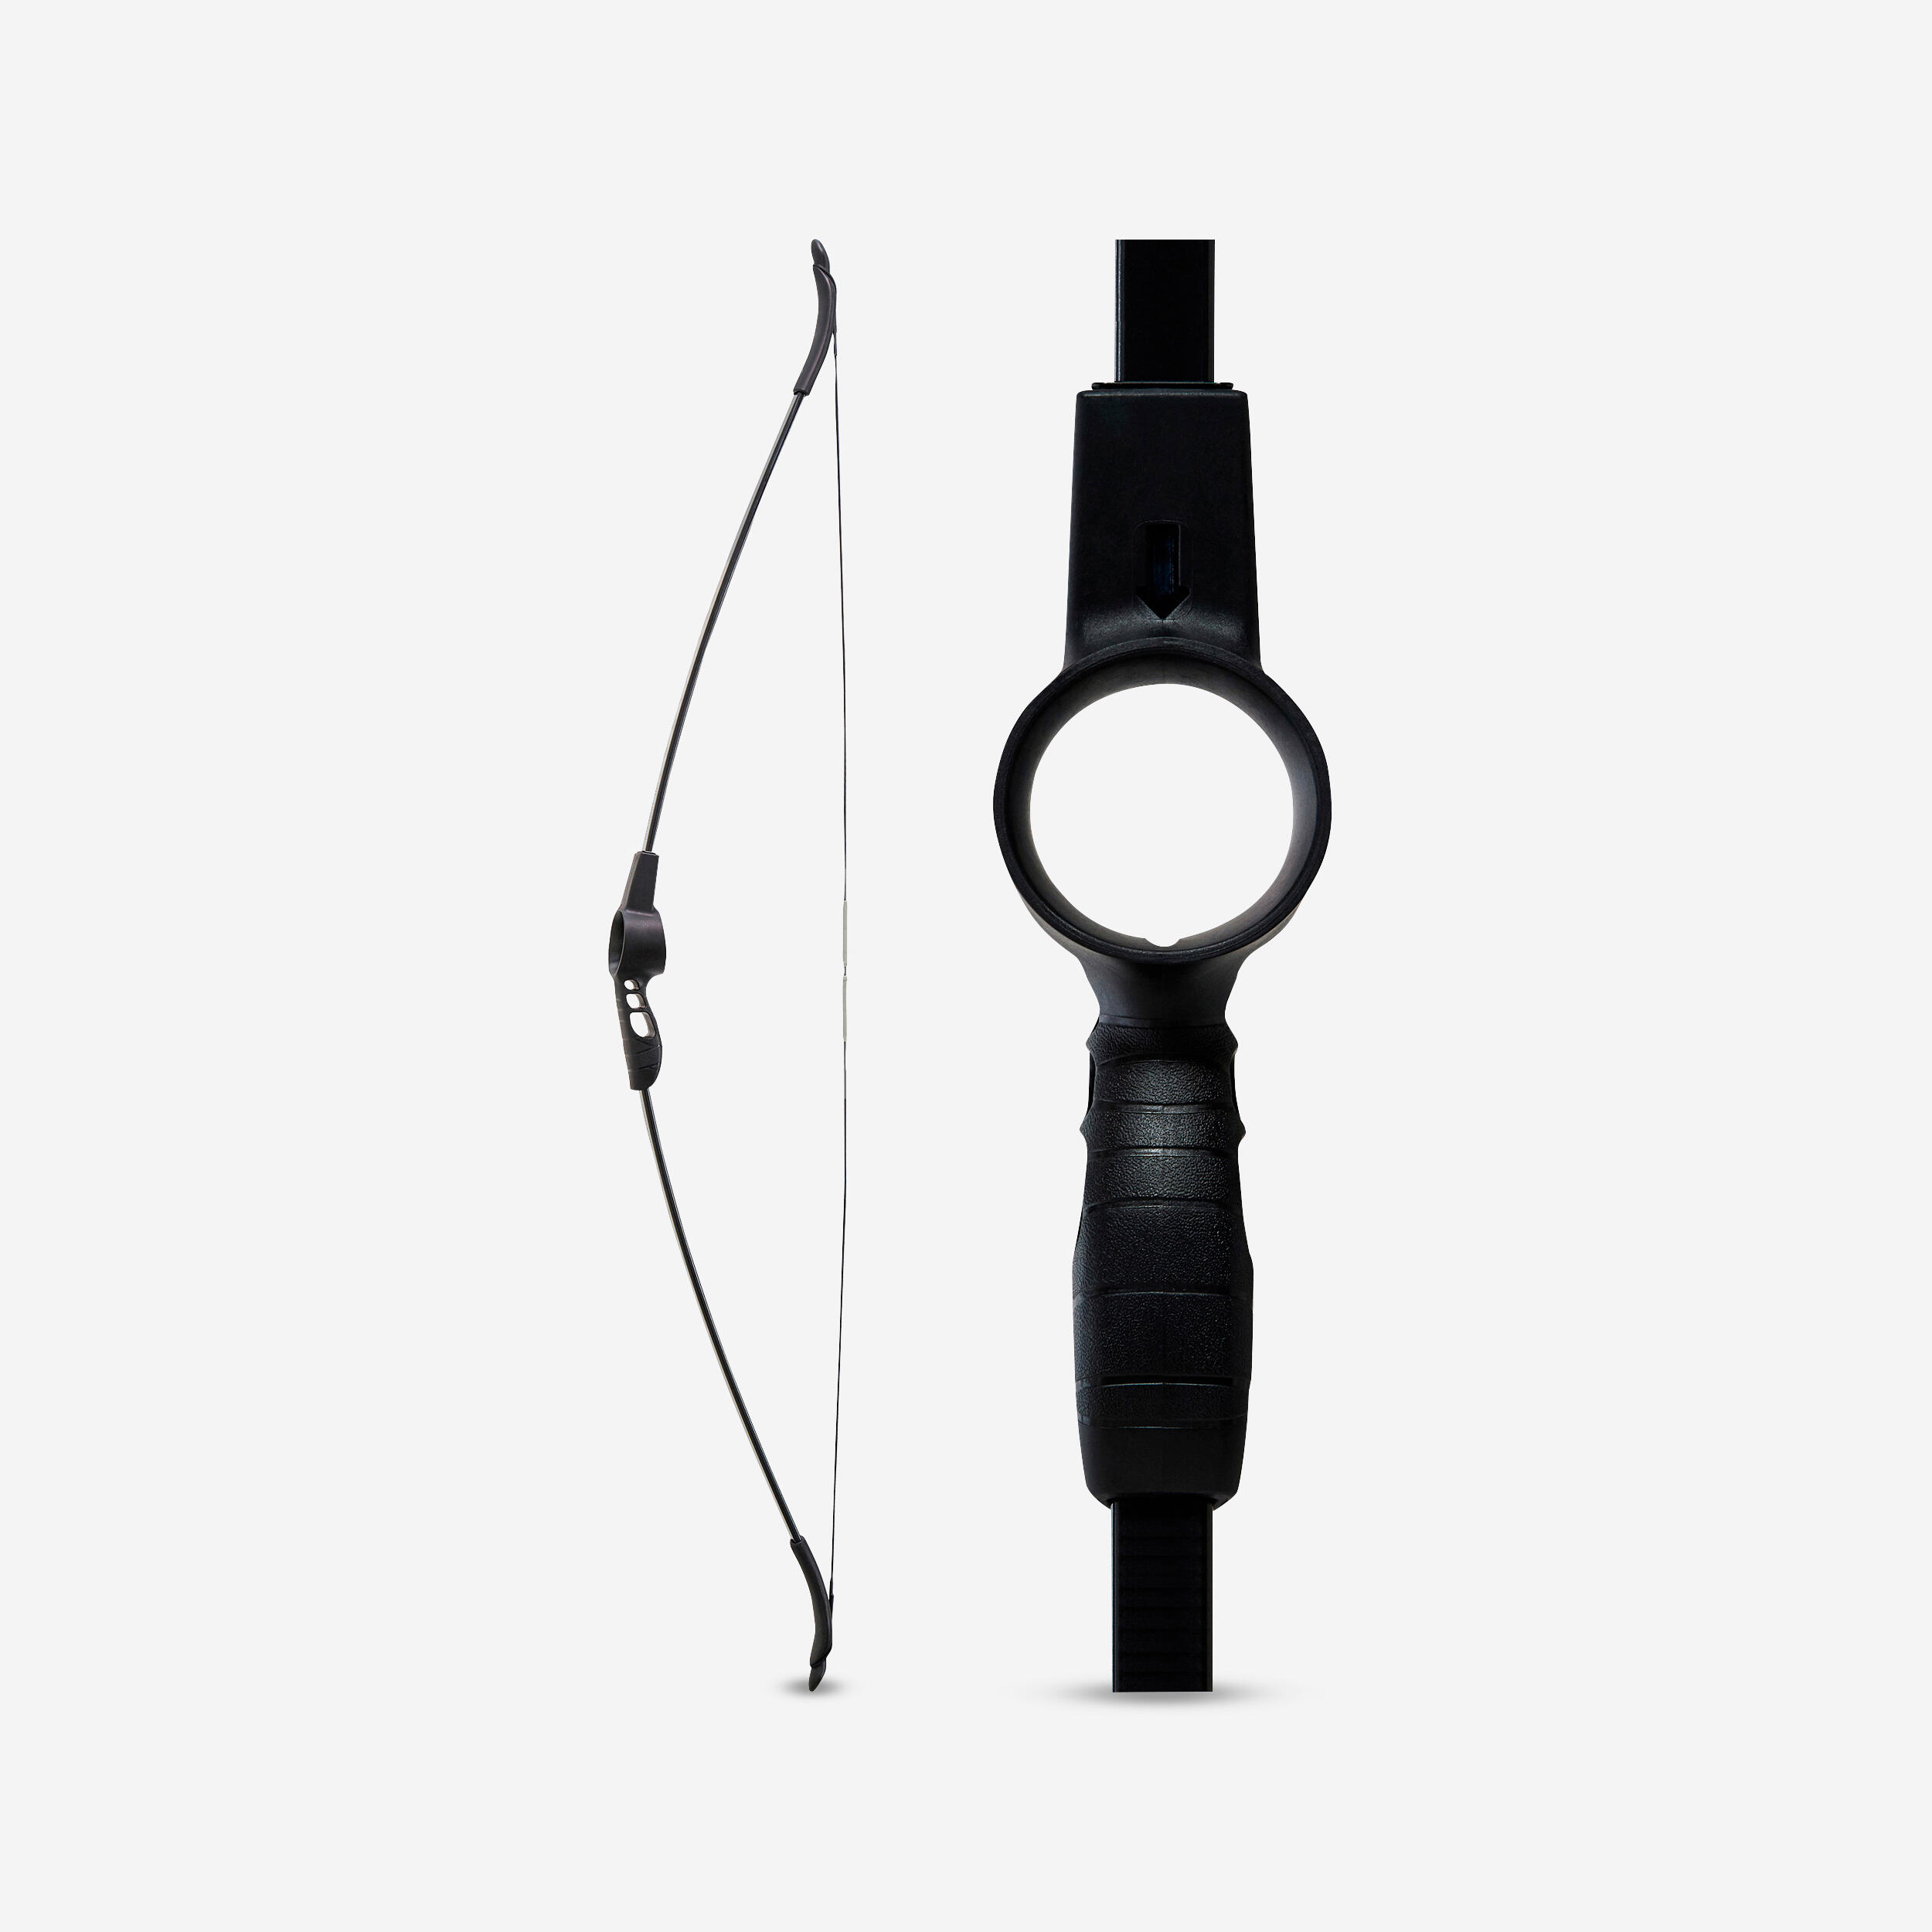 13'77'' (420 cm) Diameter Trampoline - Essential 420 - Grey, Black - Domyos  - Decathlon